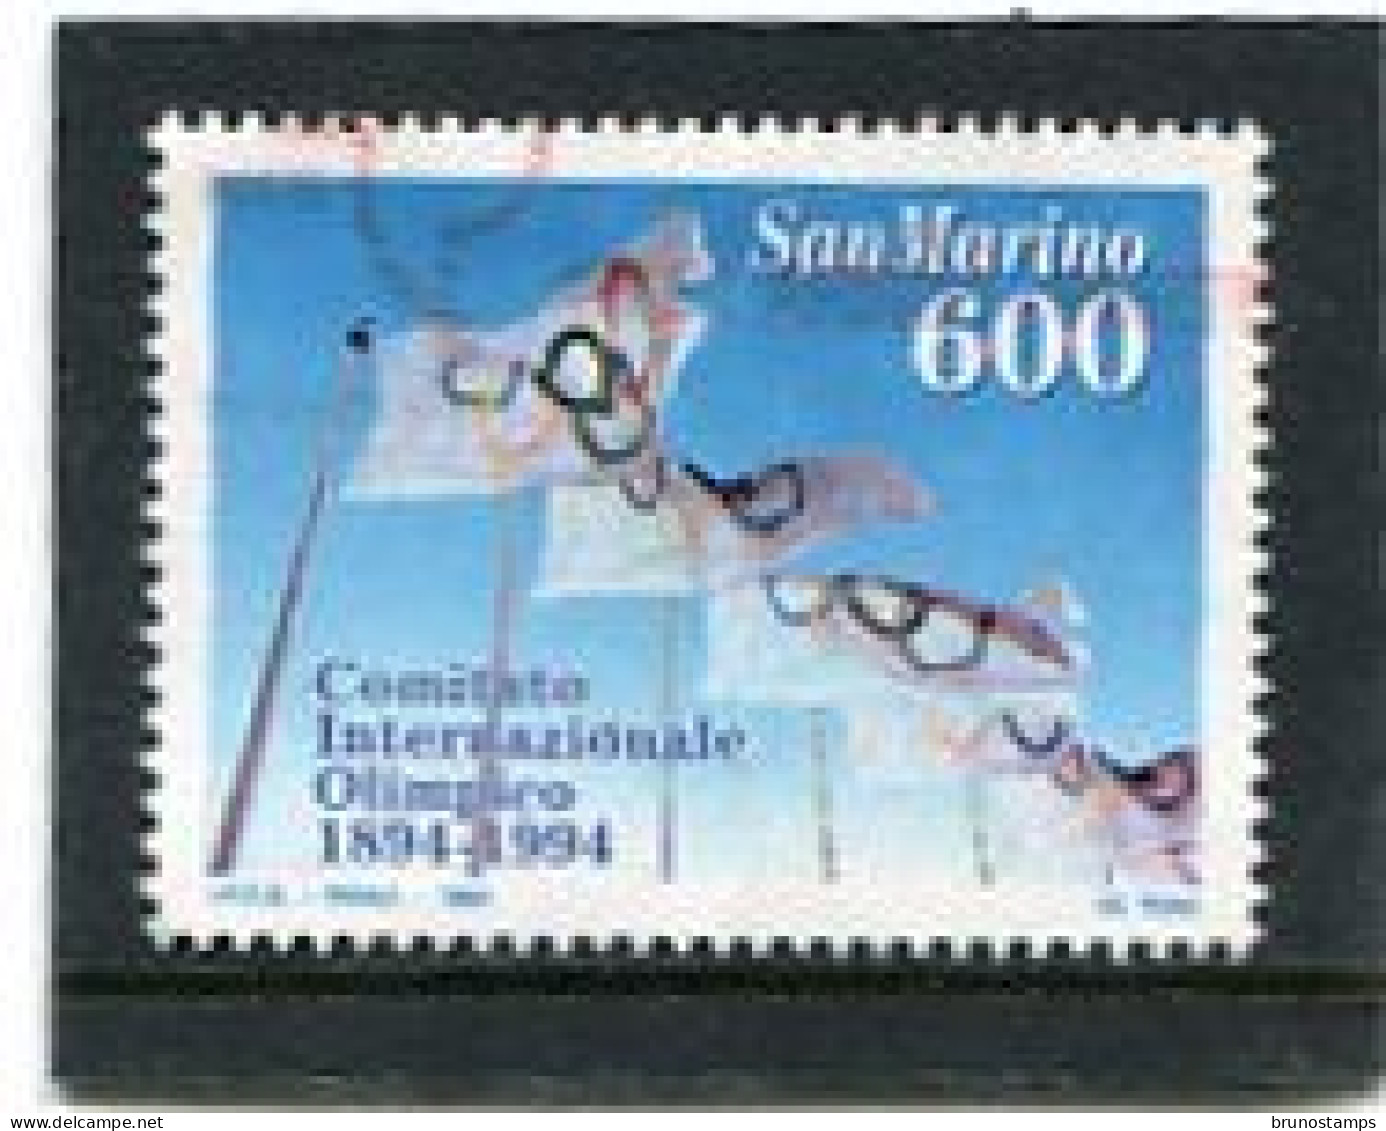 SAN MARINO - 1994  600 L  C.I.O.  CENTENARY  FINE USED - Gebruikt